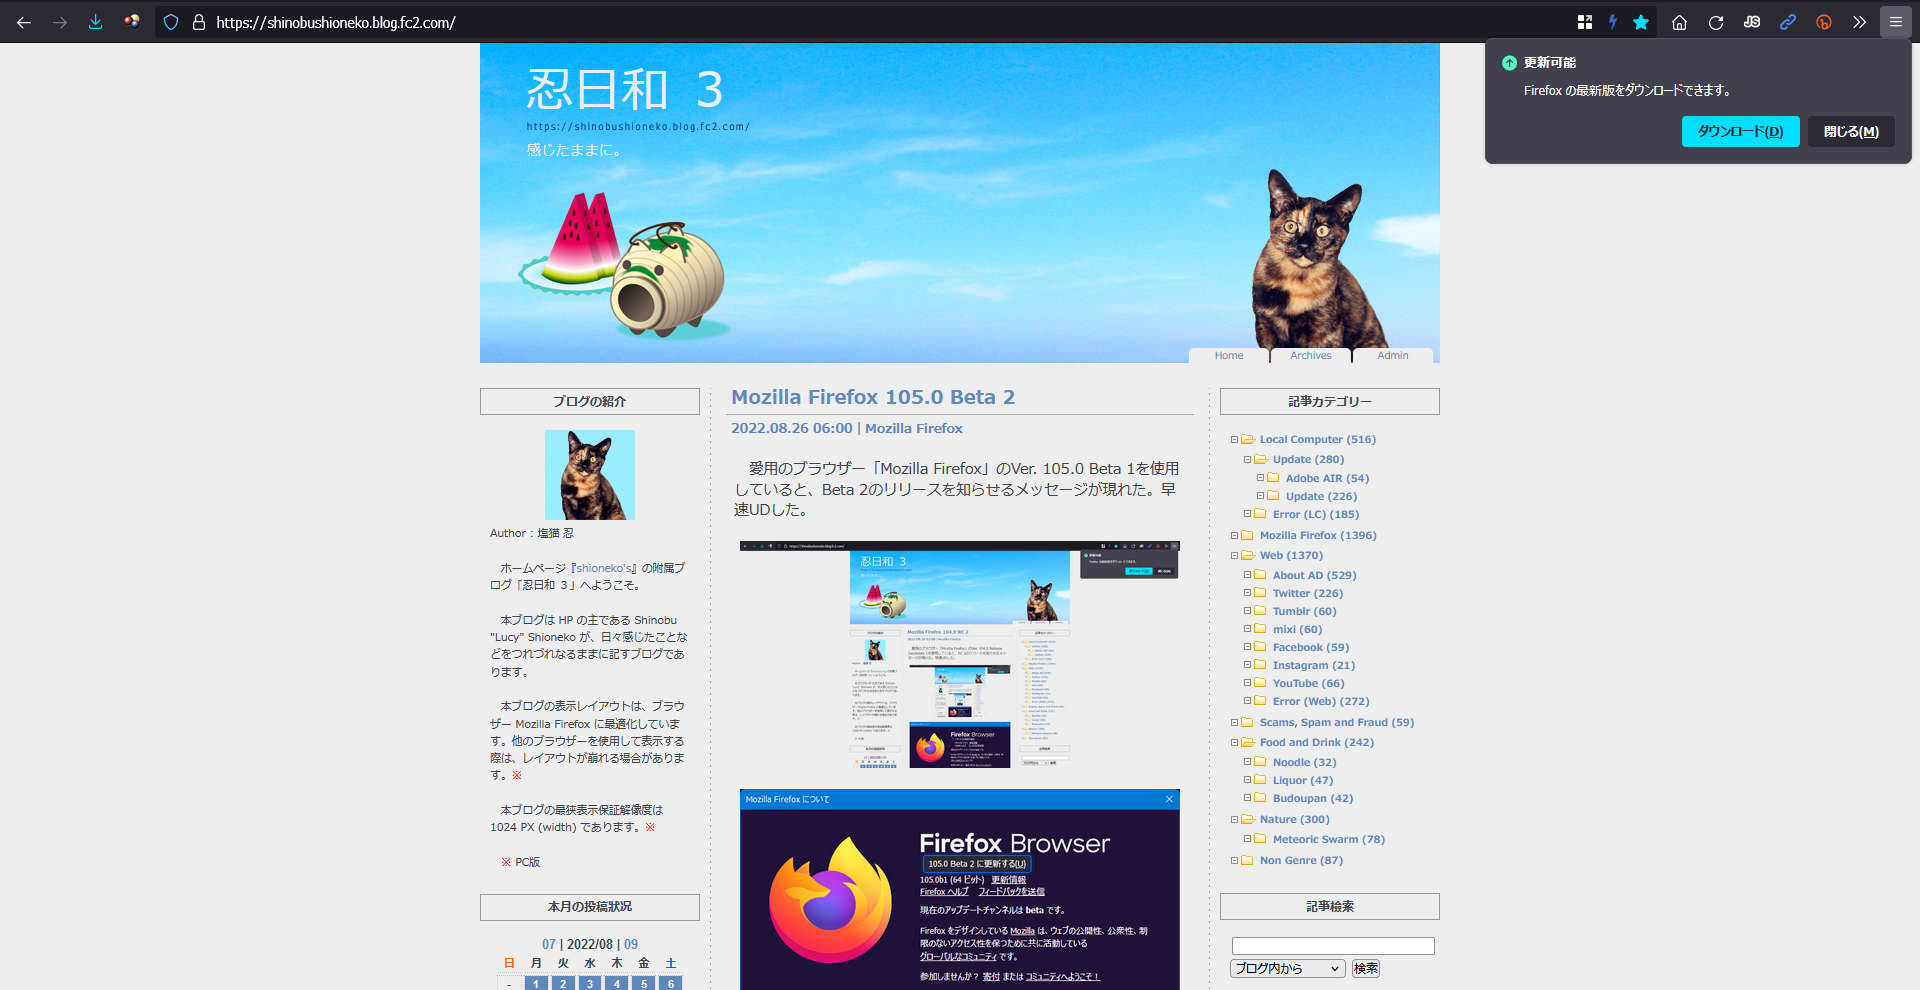 Mozilla Firefox 105.0 Beta 3